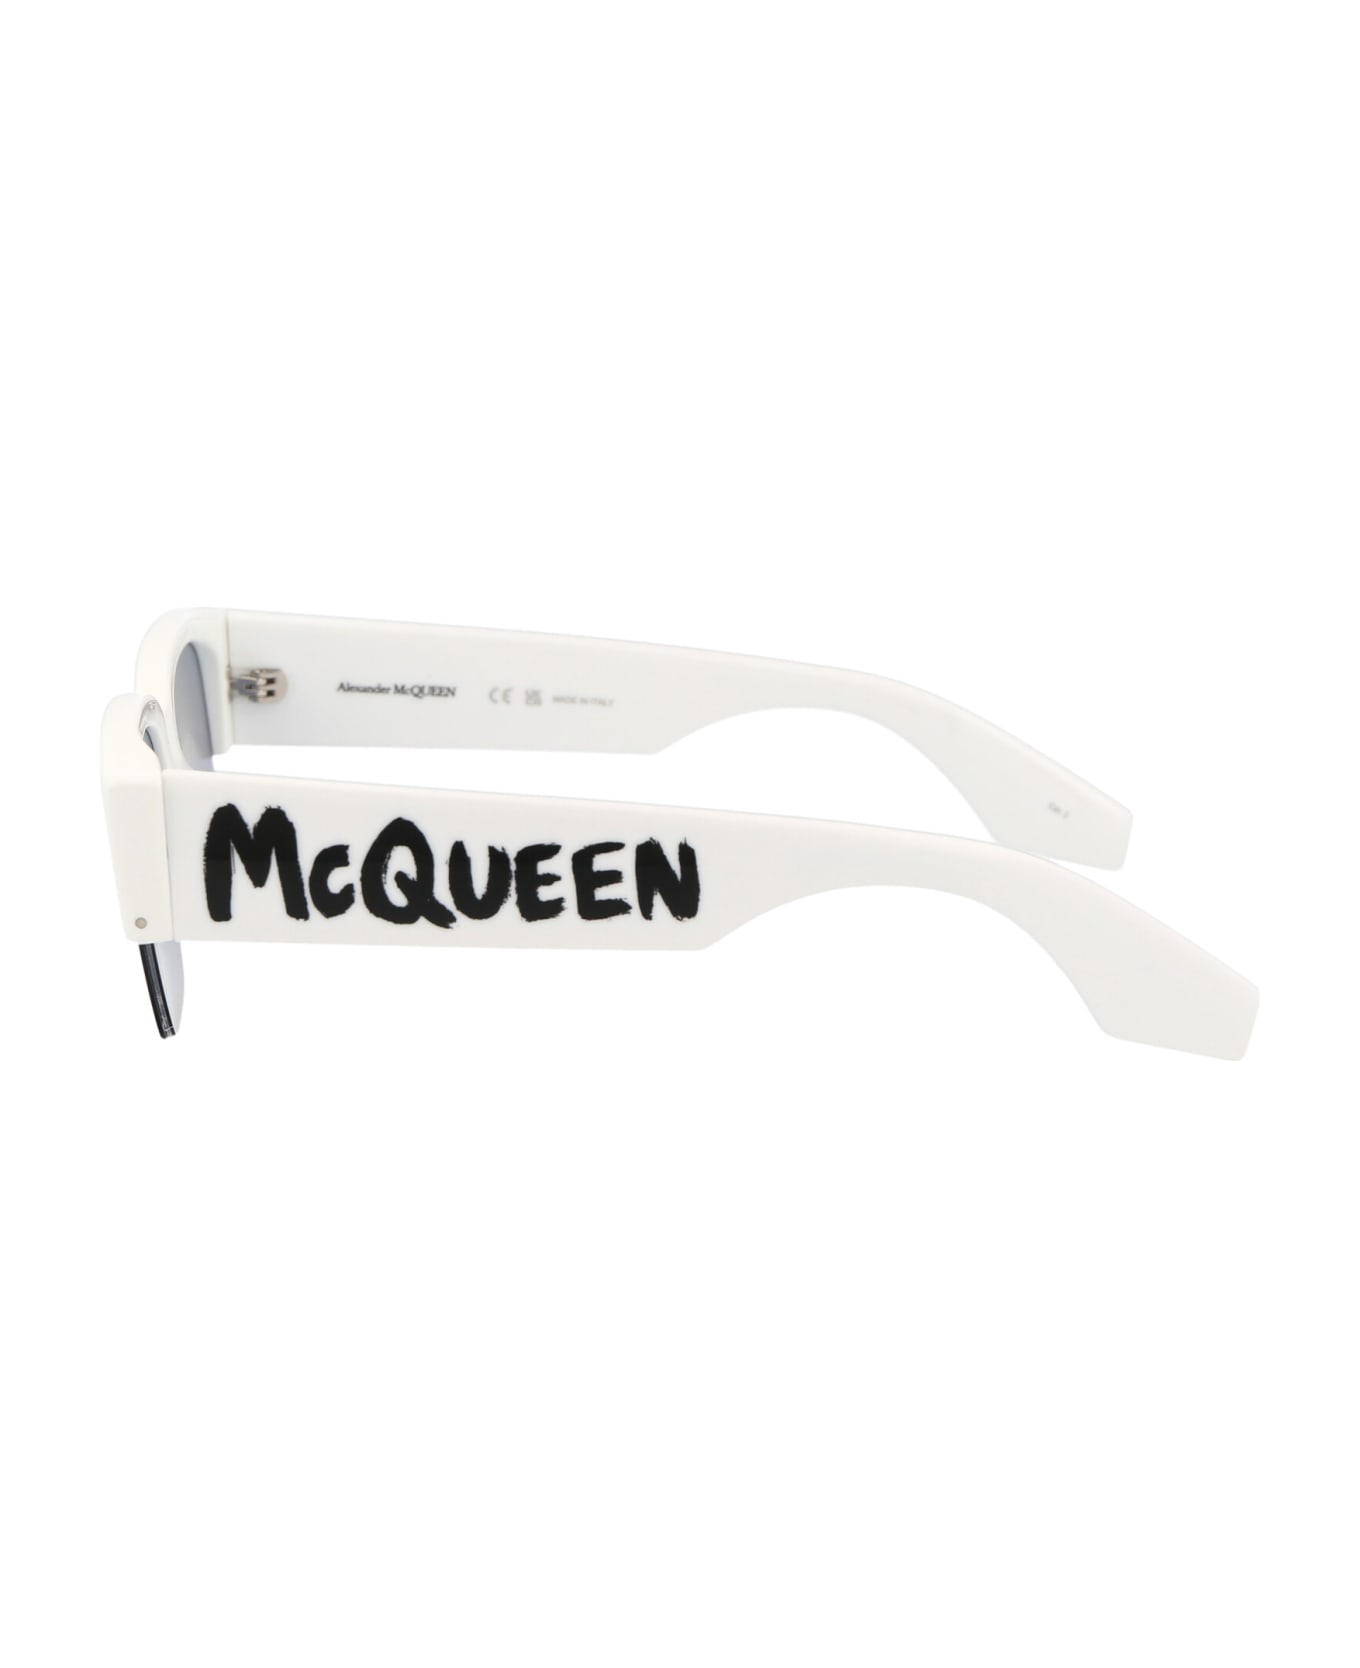 Alexander McQueen Eyewear Am0405s Sunglasses - 004 WHITE WHITE BLUE サングラス